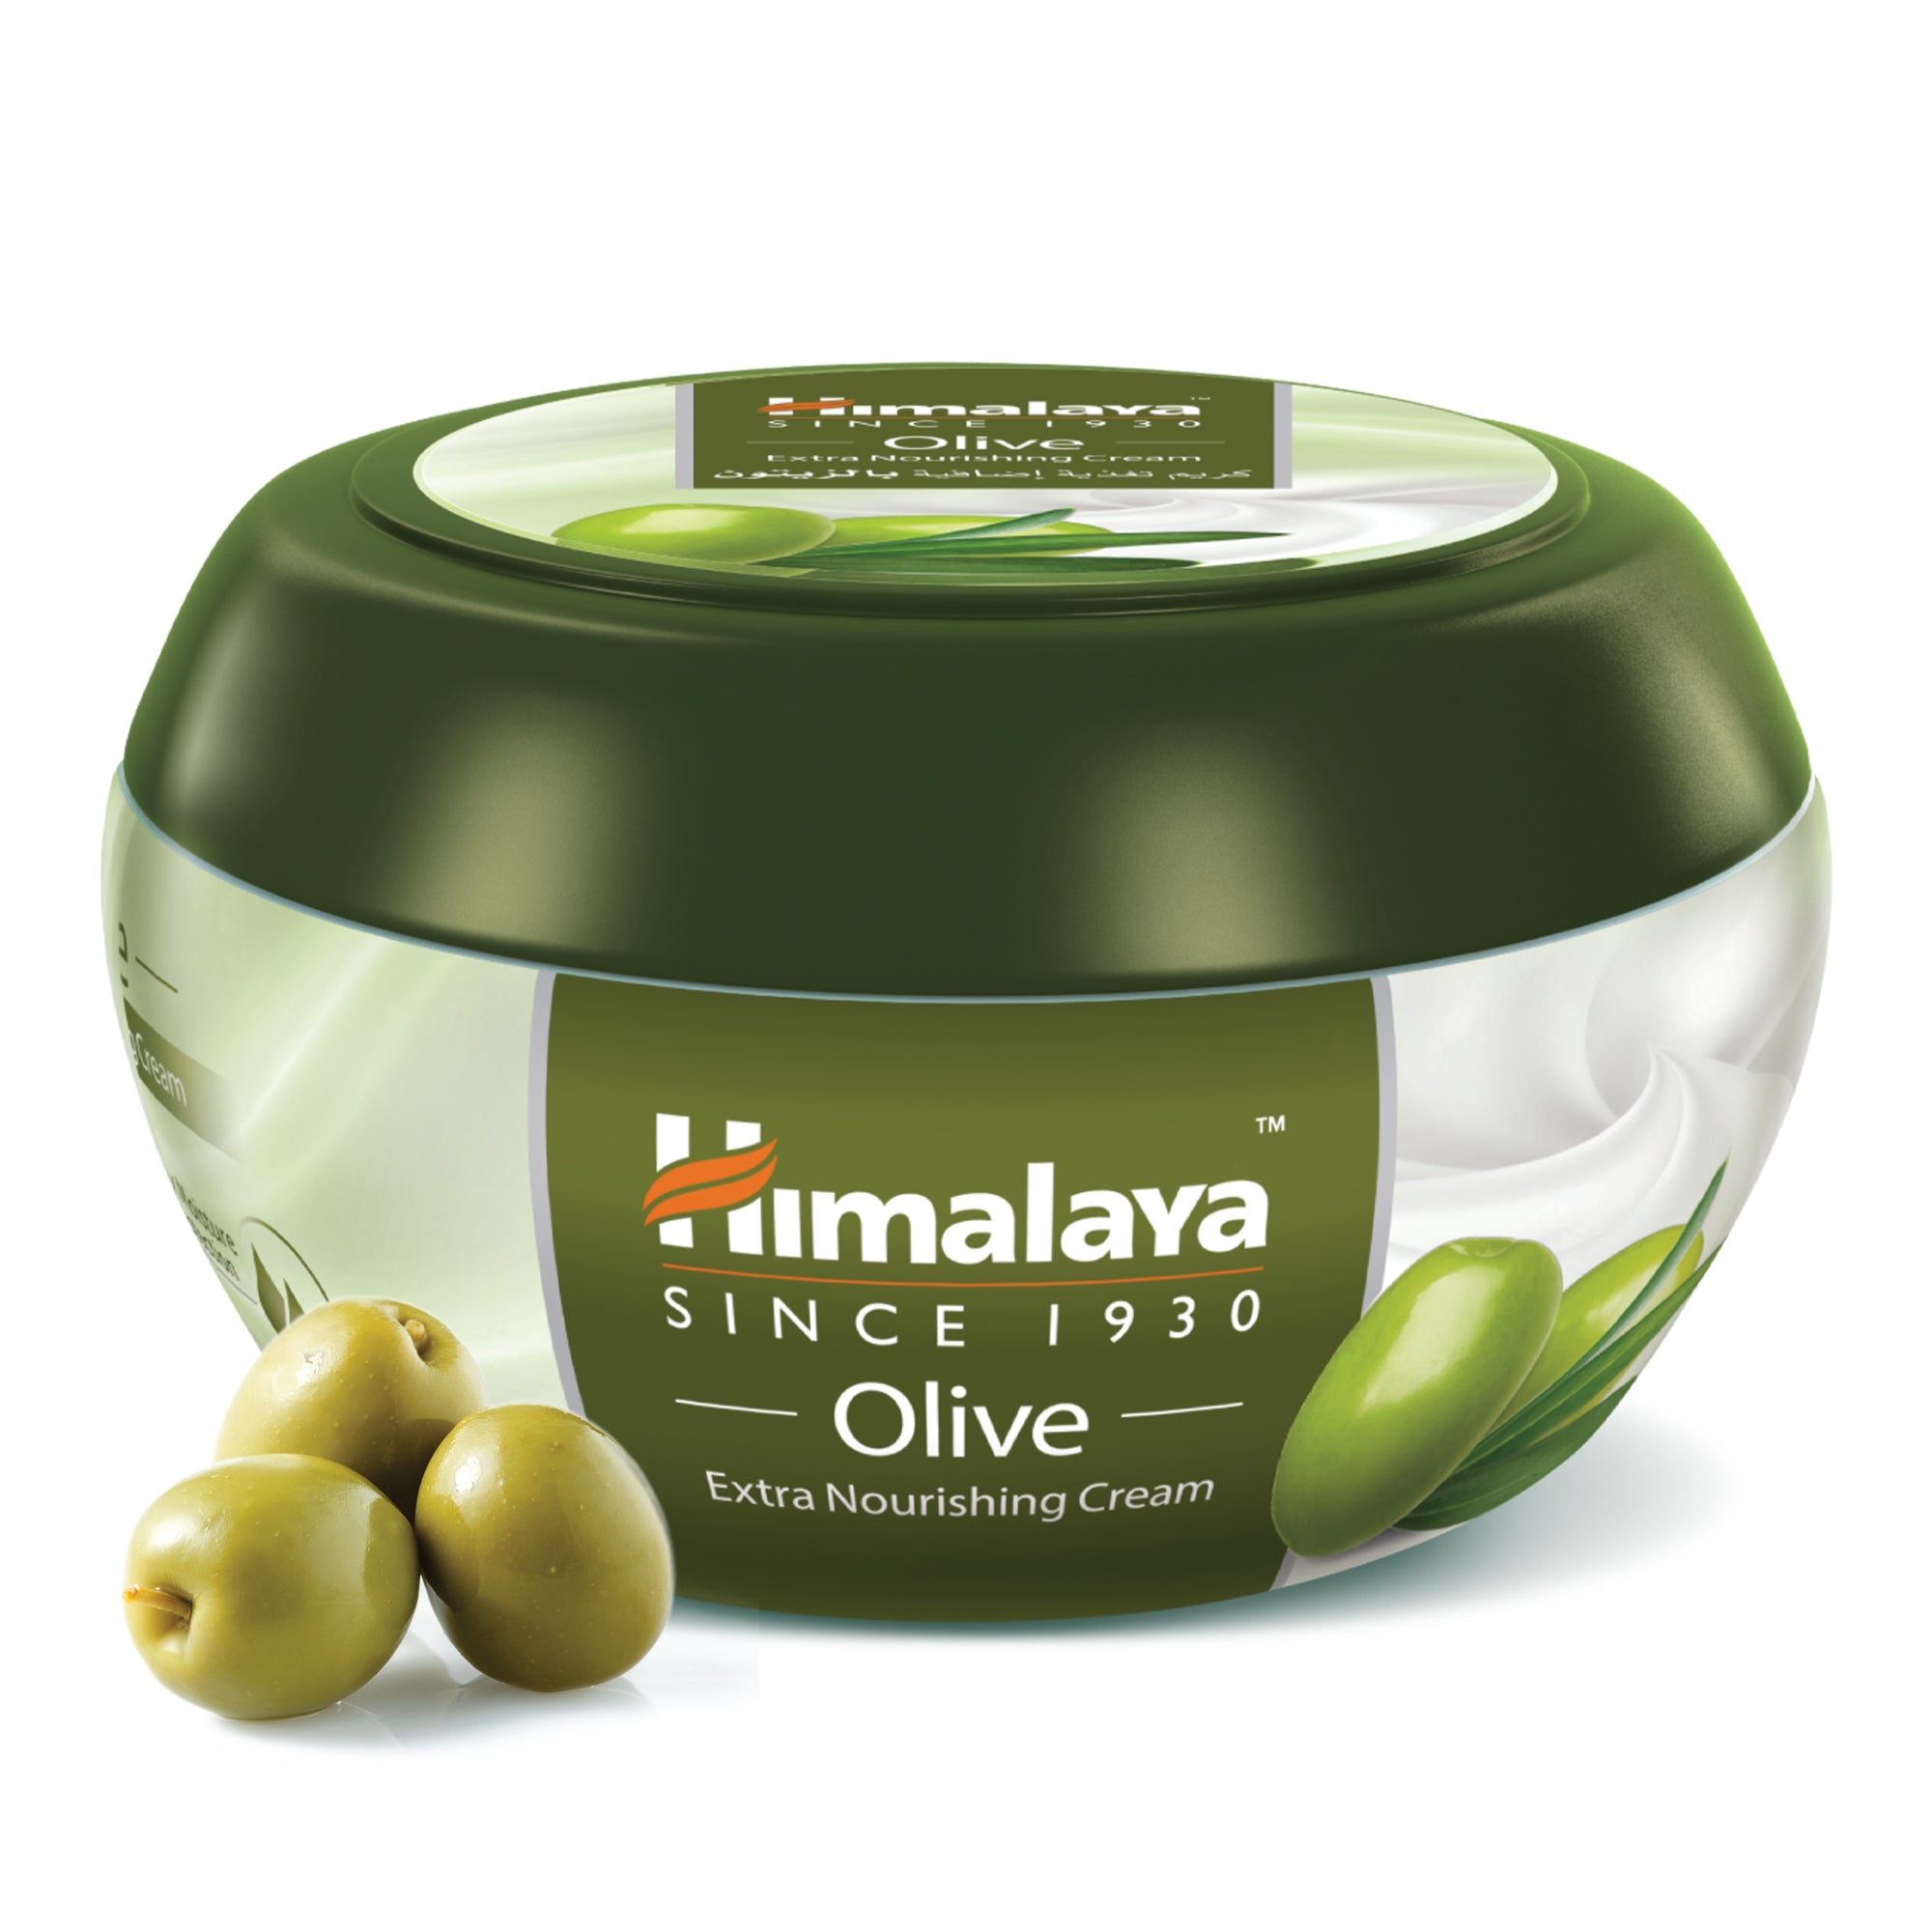 Himalaya Olive Extra Nourishing Cream - Deeply Nourishes the Skin